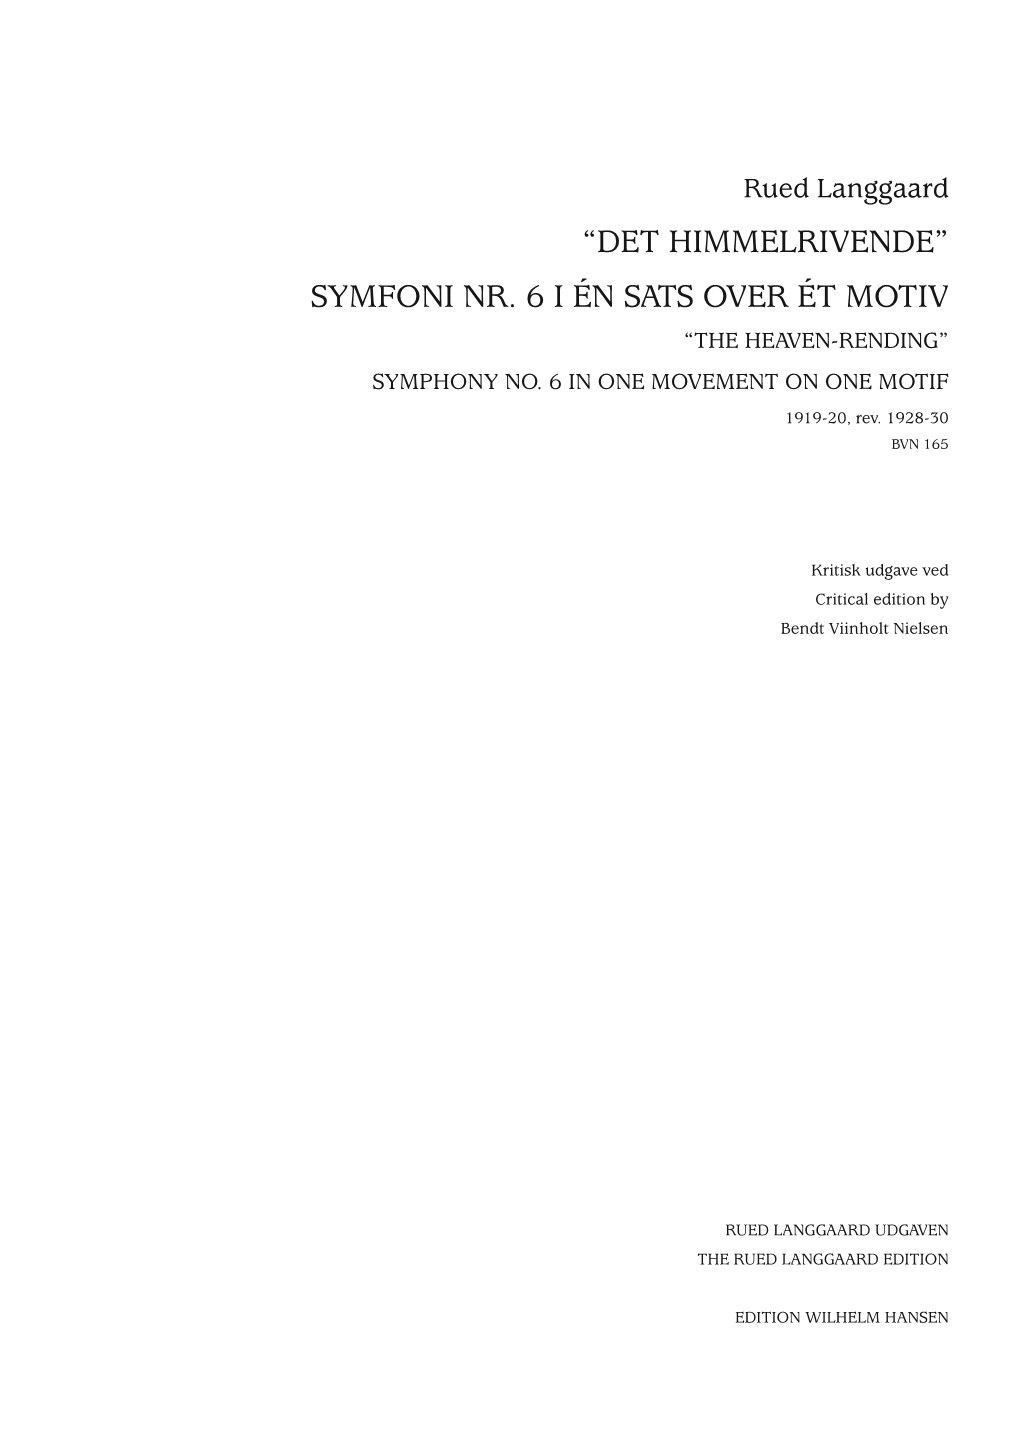 Symfoni Nr. 6 I Én Sats Over Ét Motiv “The Heaven-Rending” Symphony No